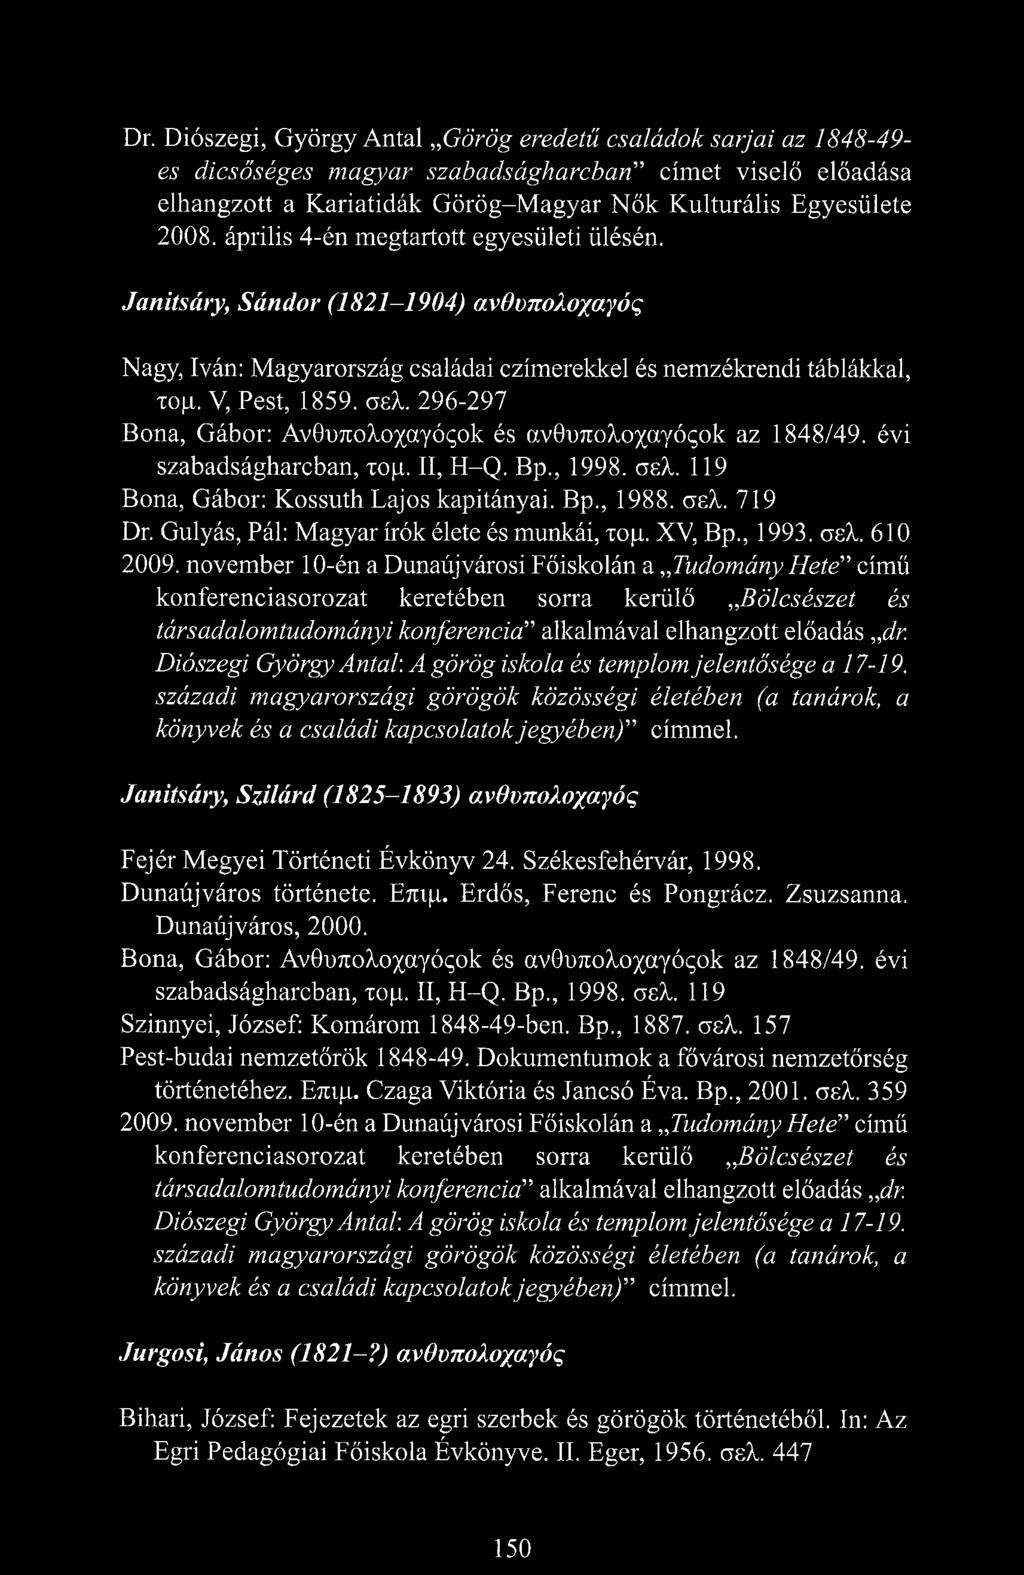 296-297 Bona, Gábor: ΑνθυπολοχαγόςοΕ és ανθυπολοχαγόςοε az 1848/49. évi szabadságharcban, τομ. II, H-Q. Bp., 1998. σελ. 119 Bona, Gábor: Kossuth Lajos kapitányai. Bp., 1988. σελ. 719 Dr.